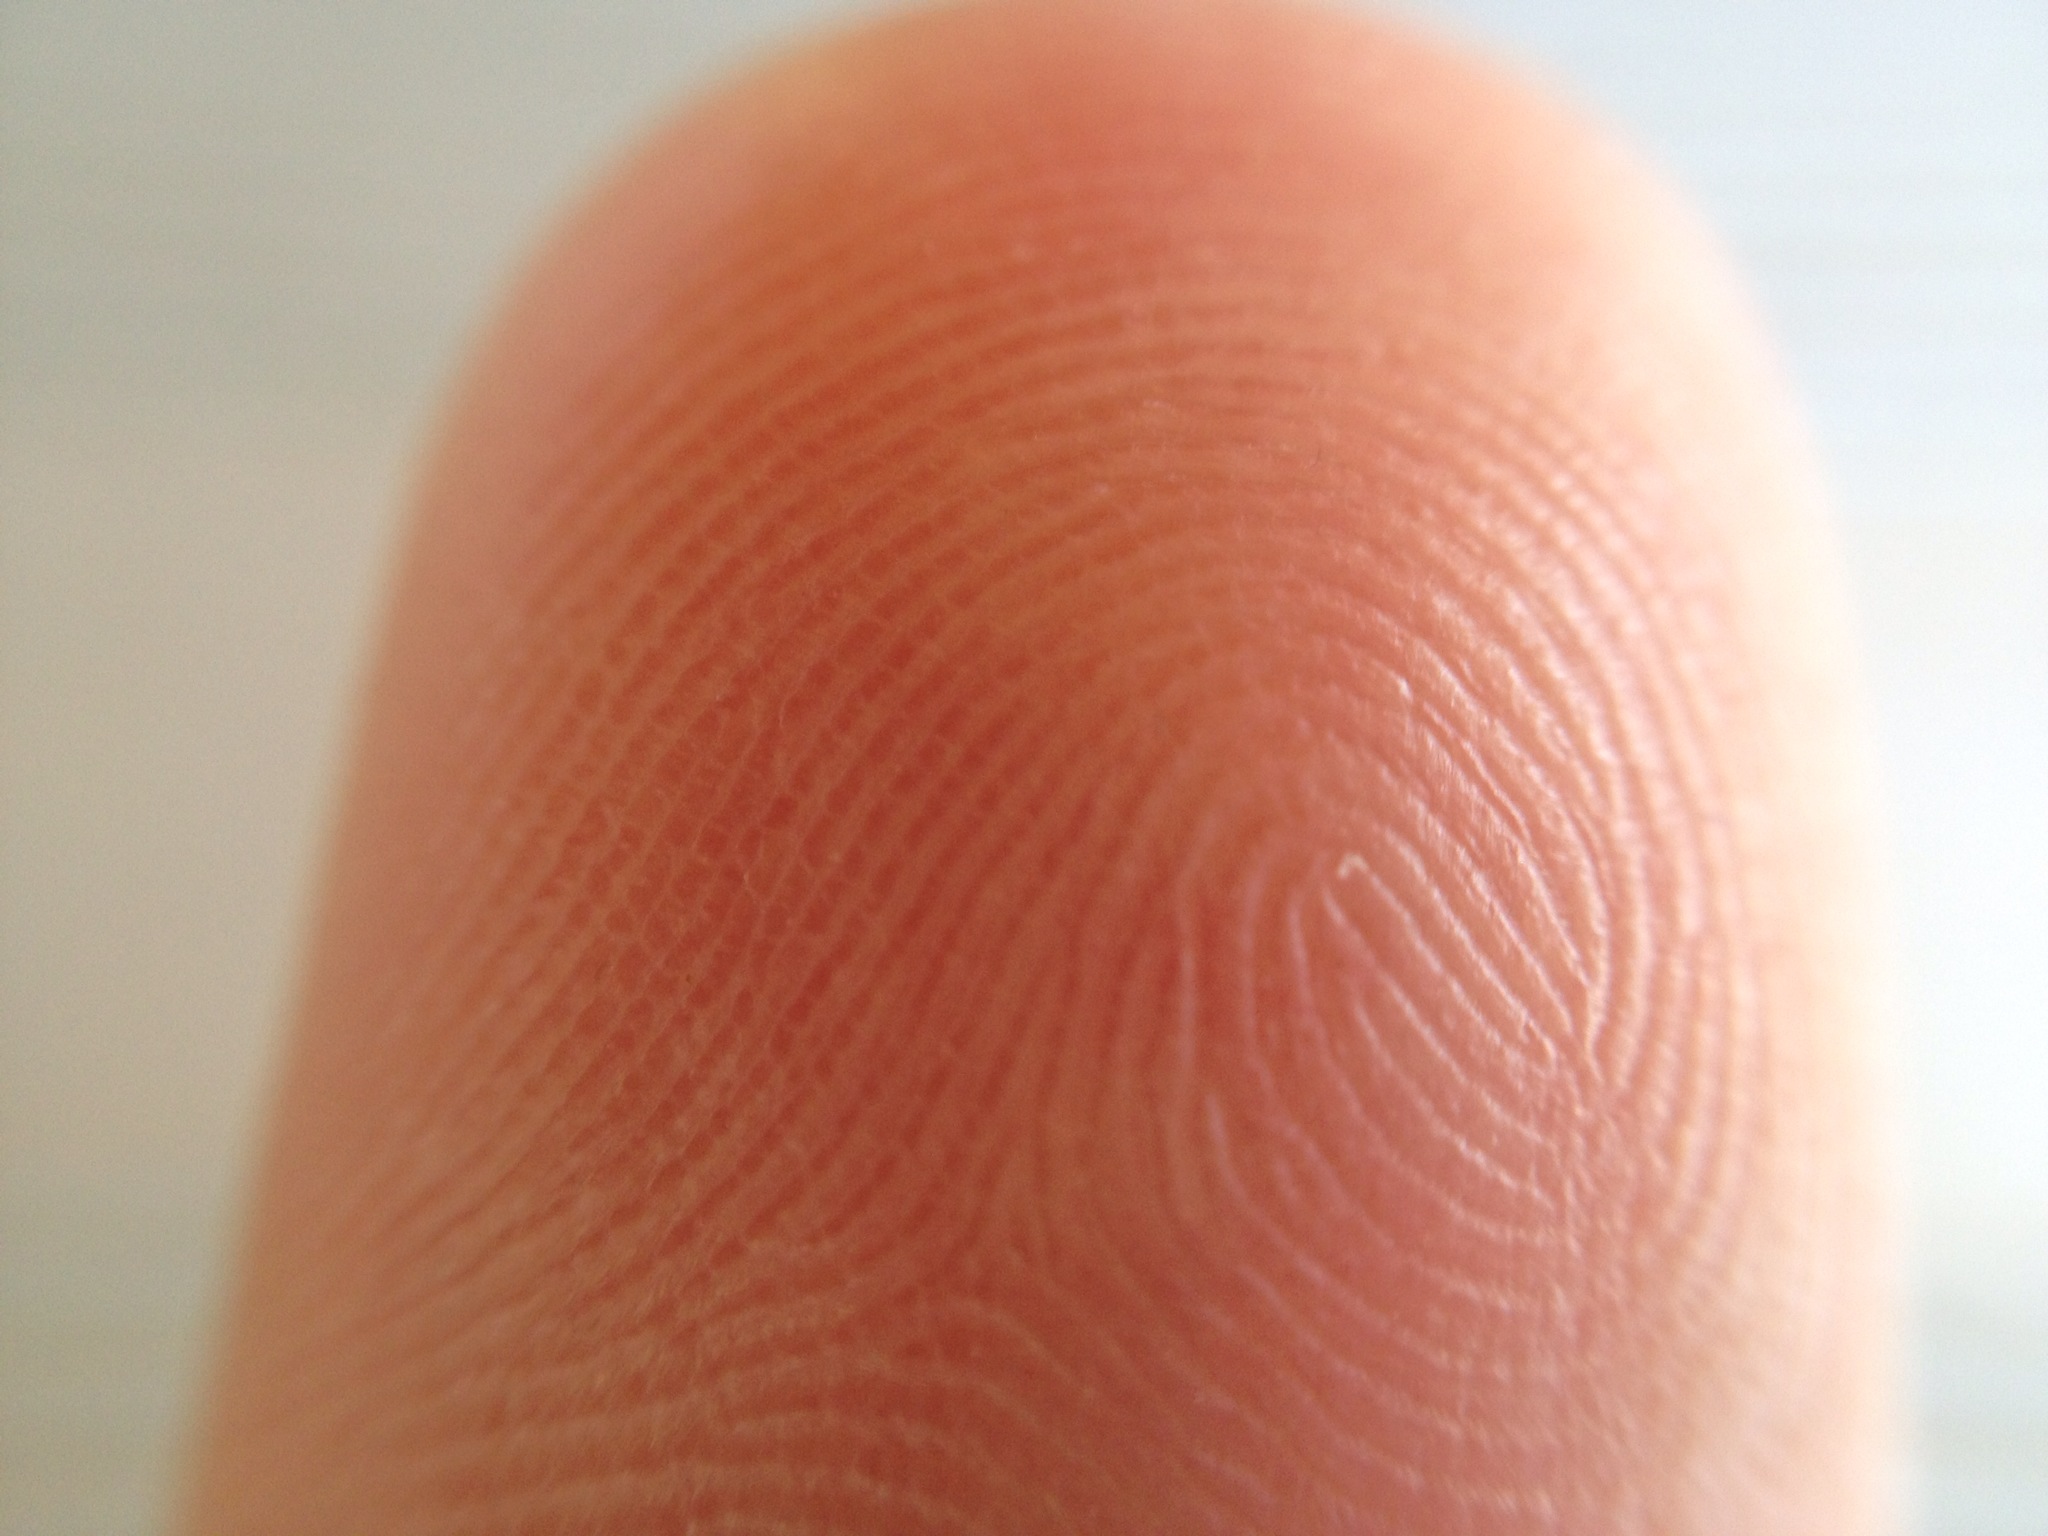 3D unique finger impression scanner to support security